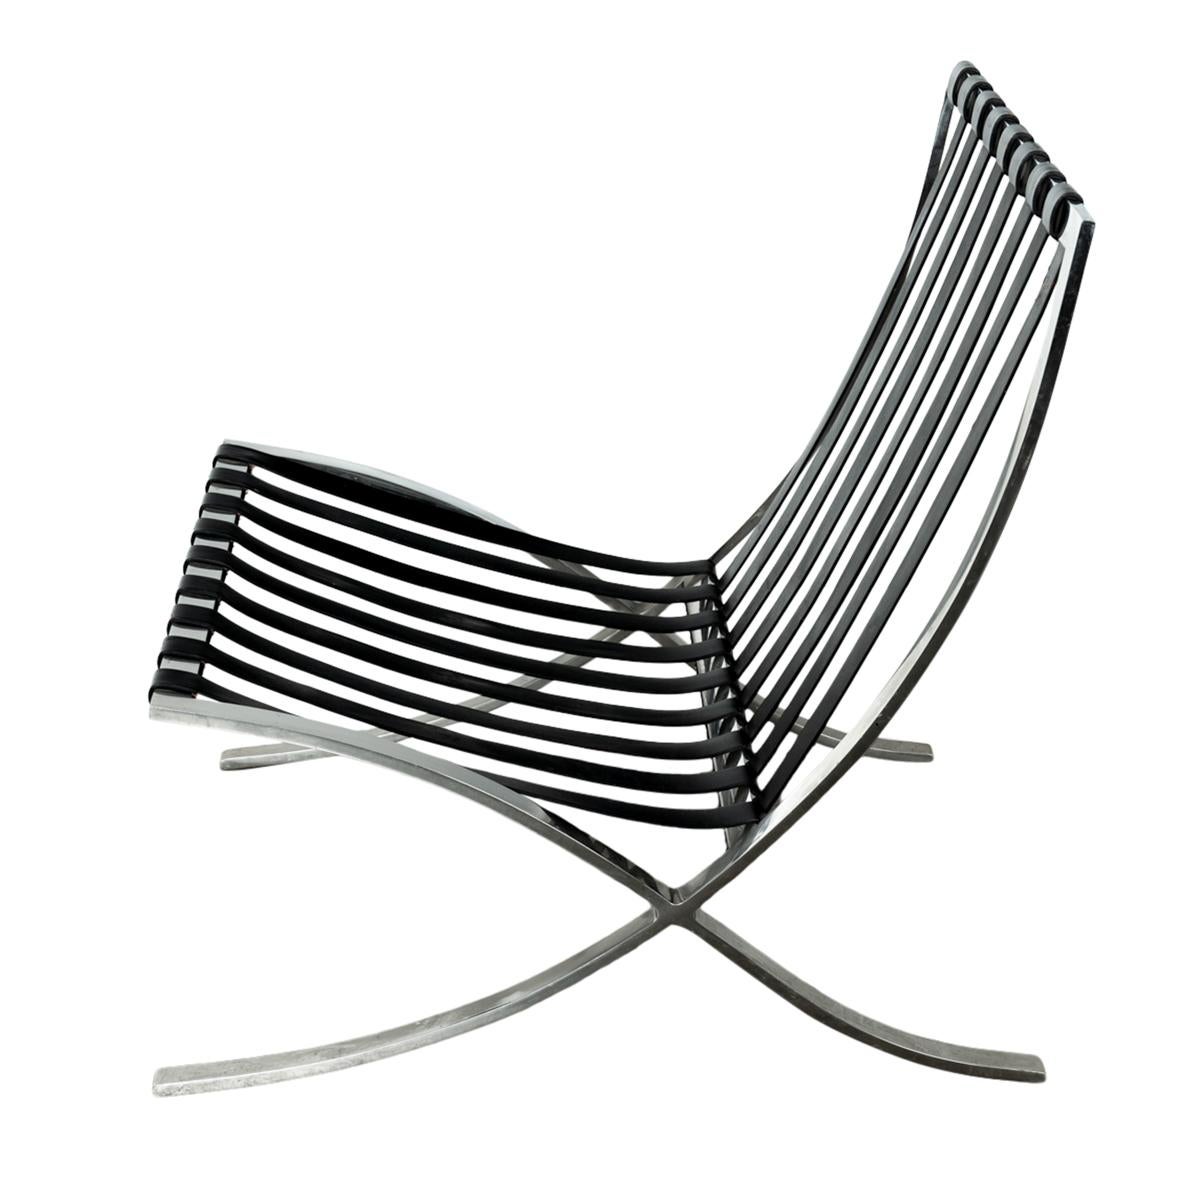 Frühes Paar MCM Knoll Barcelona-Stühle, Mies van der Rohe 1961, schwarzes Leder im Angebot 8